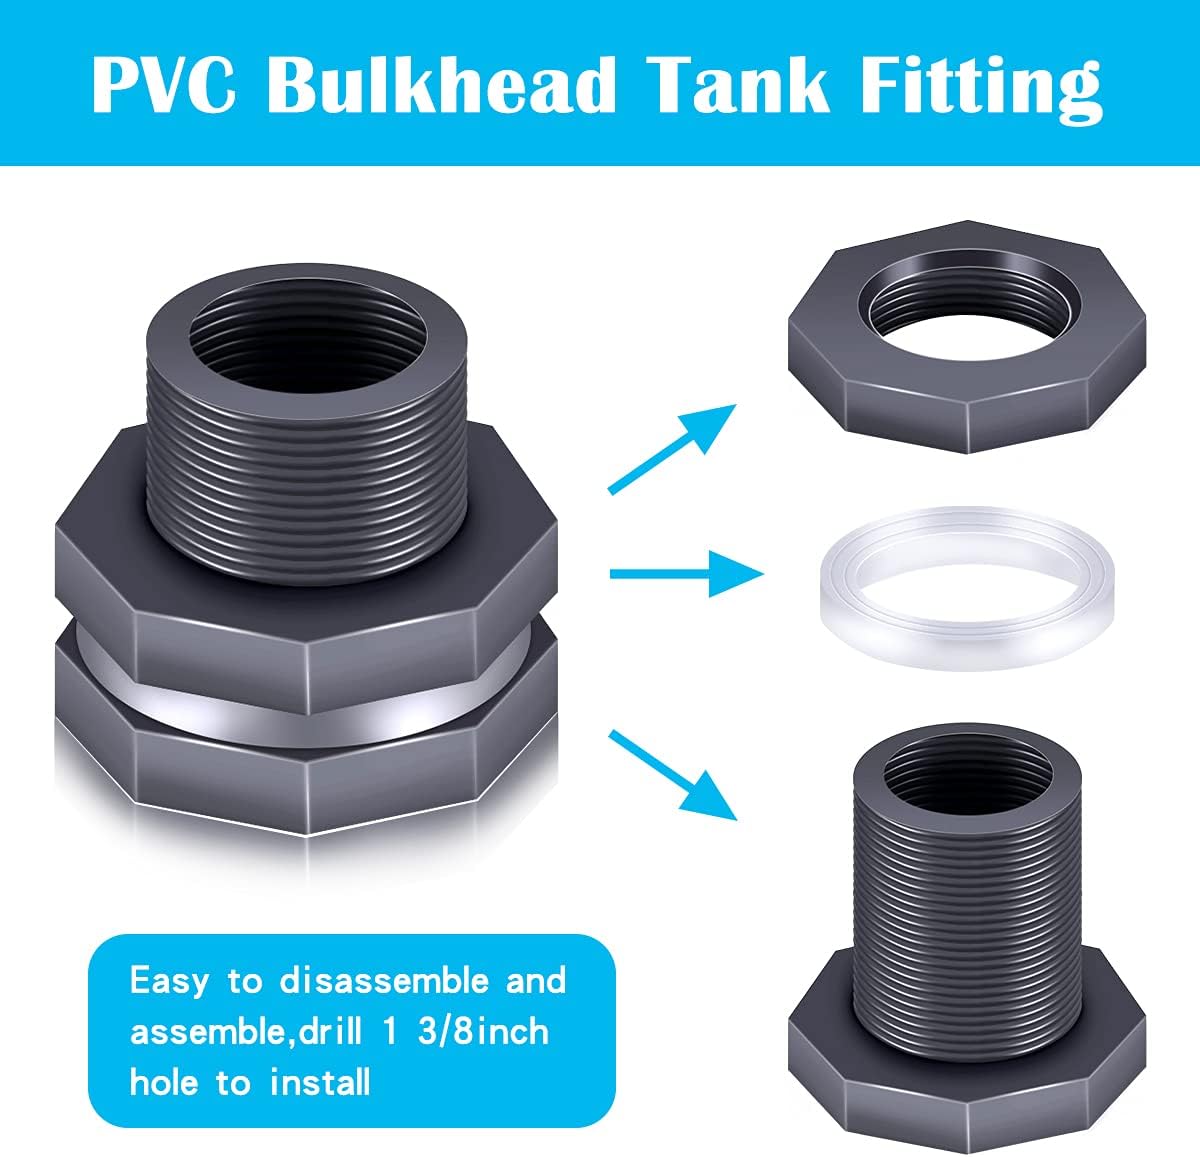 4PCS PVC Bulkhead Fitting 3/4 Inch,Water Tank Connector Adapter,Thru-Bulk Pipe Fitting for Rain Barrels, Aquariums,Water Tanks,Pools(Grey) H-007